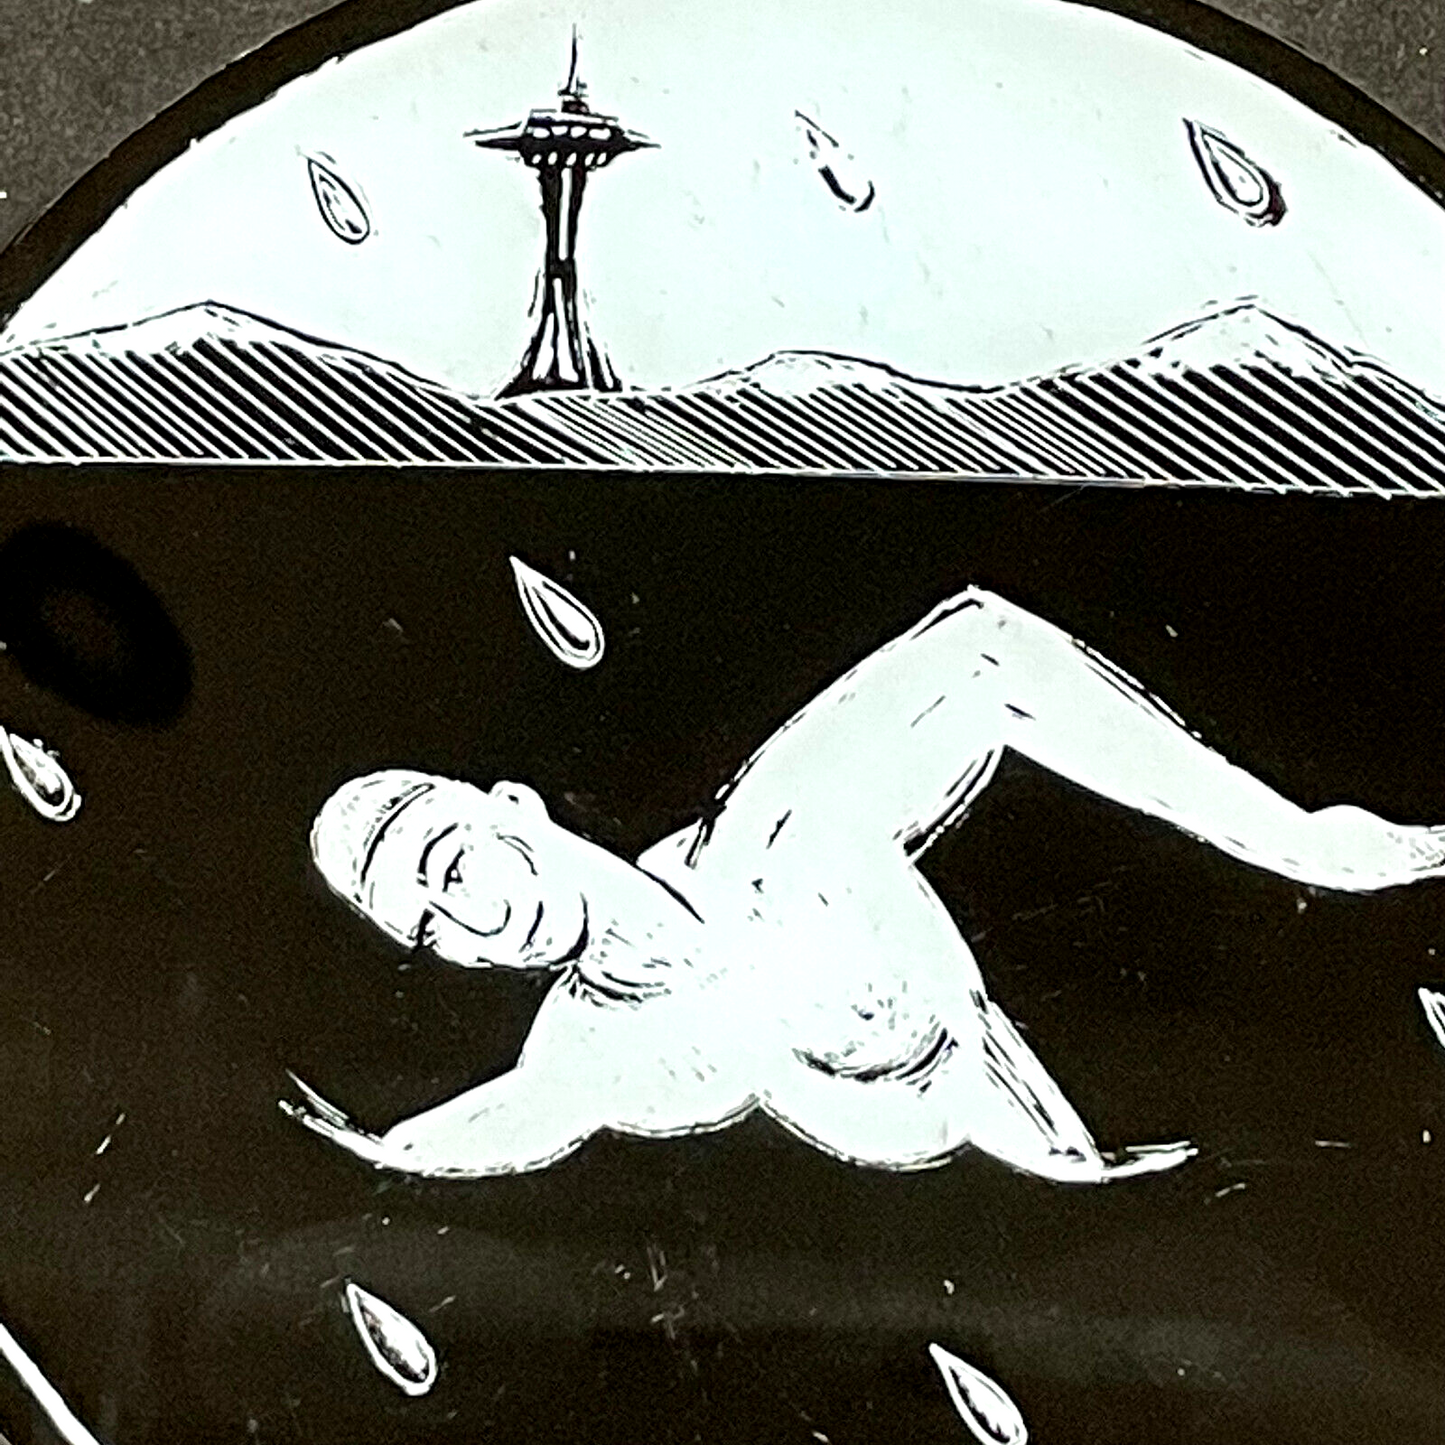 Walter Lieberman Seattle WA Glass Artist Original Art of the Space Needle & Swimmer